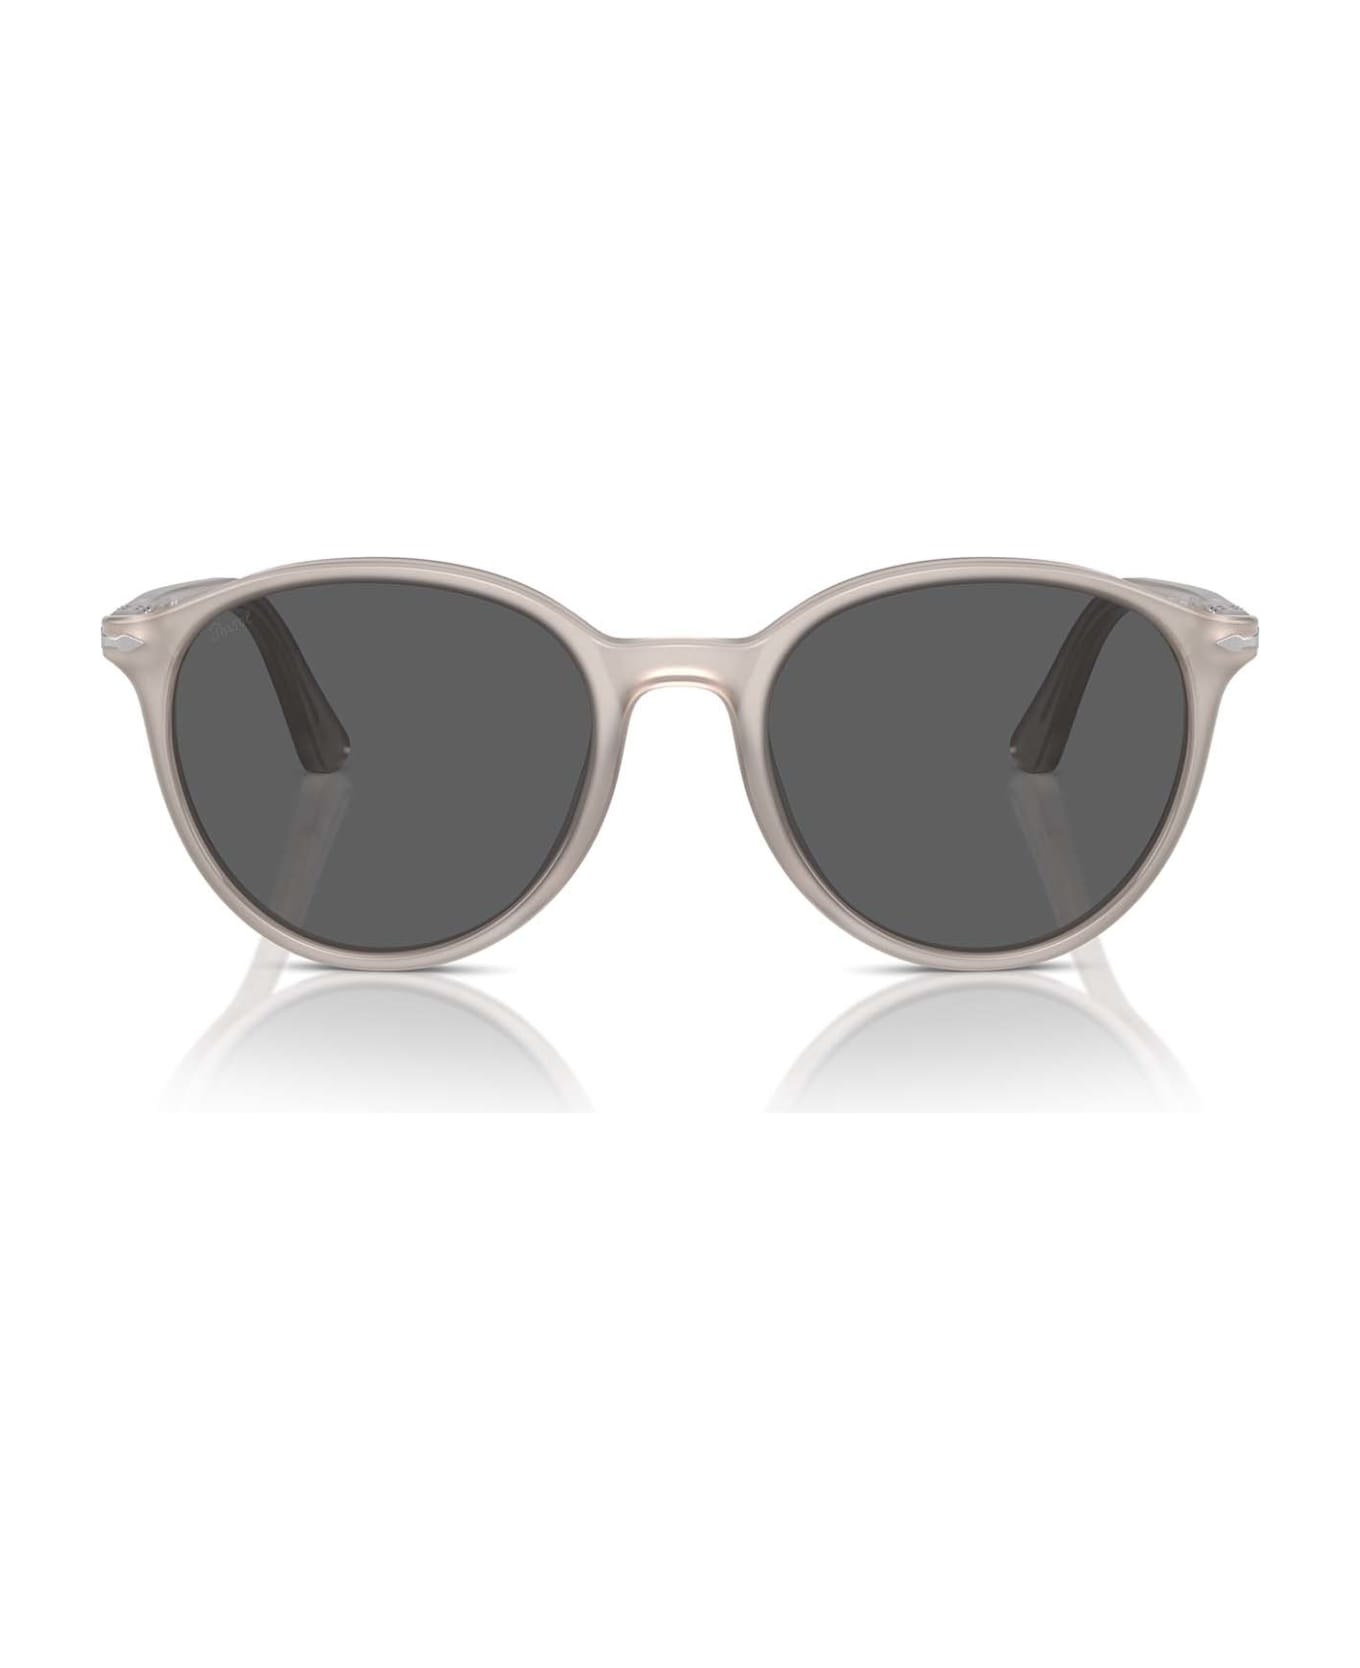 Persol Po3350s Opal Grey Sunglasses - Opal Grey